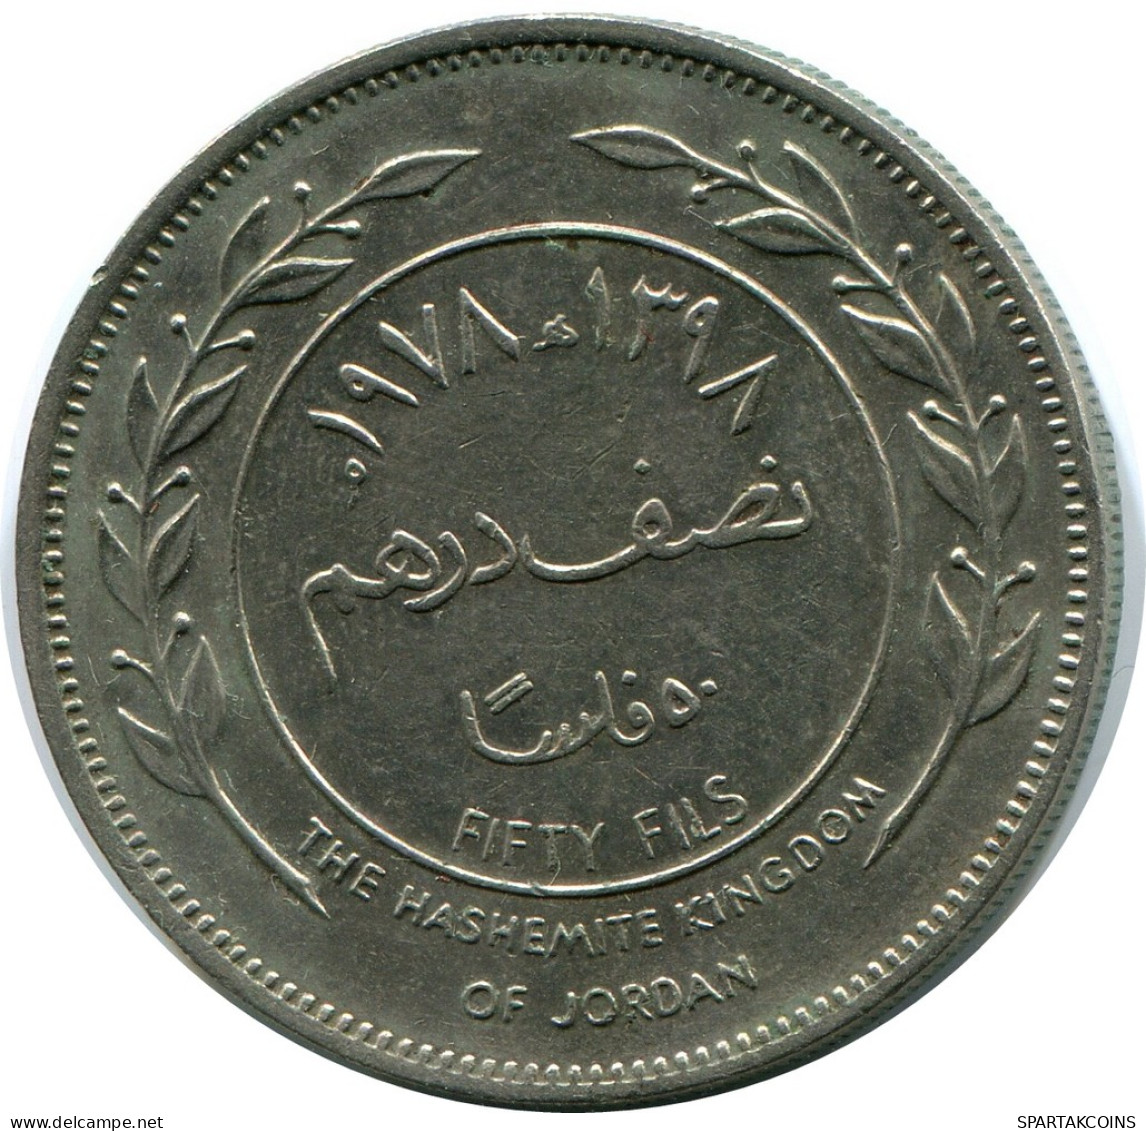 ½ DIRHAM / 50 FILS 1978 JORDAN Coin #AP074.U - Jordanie